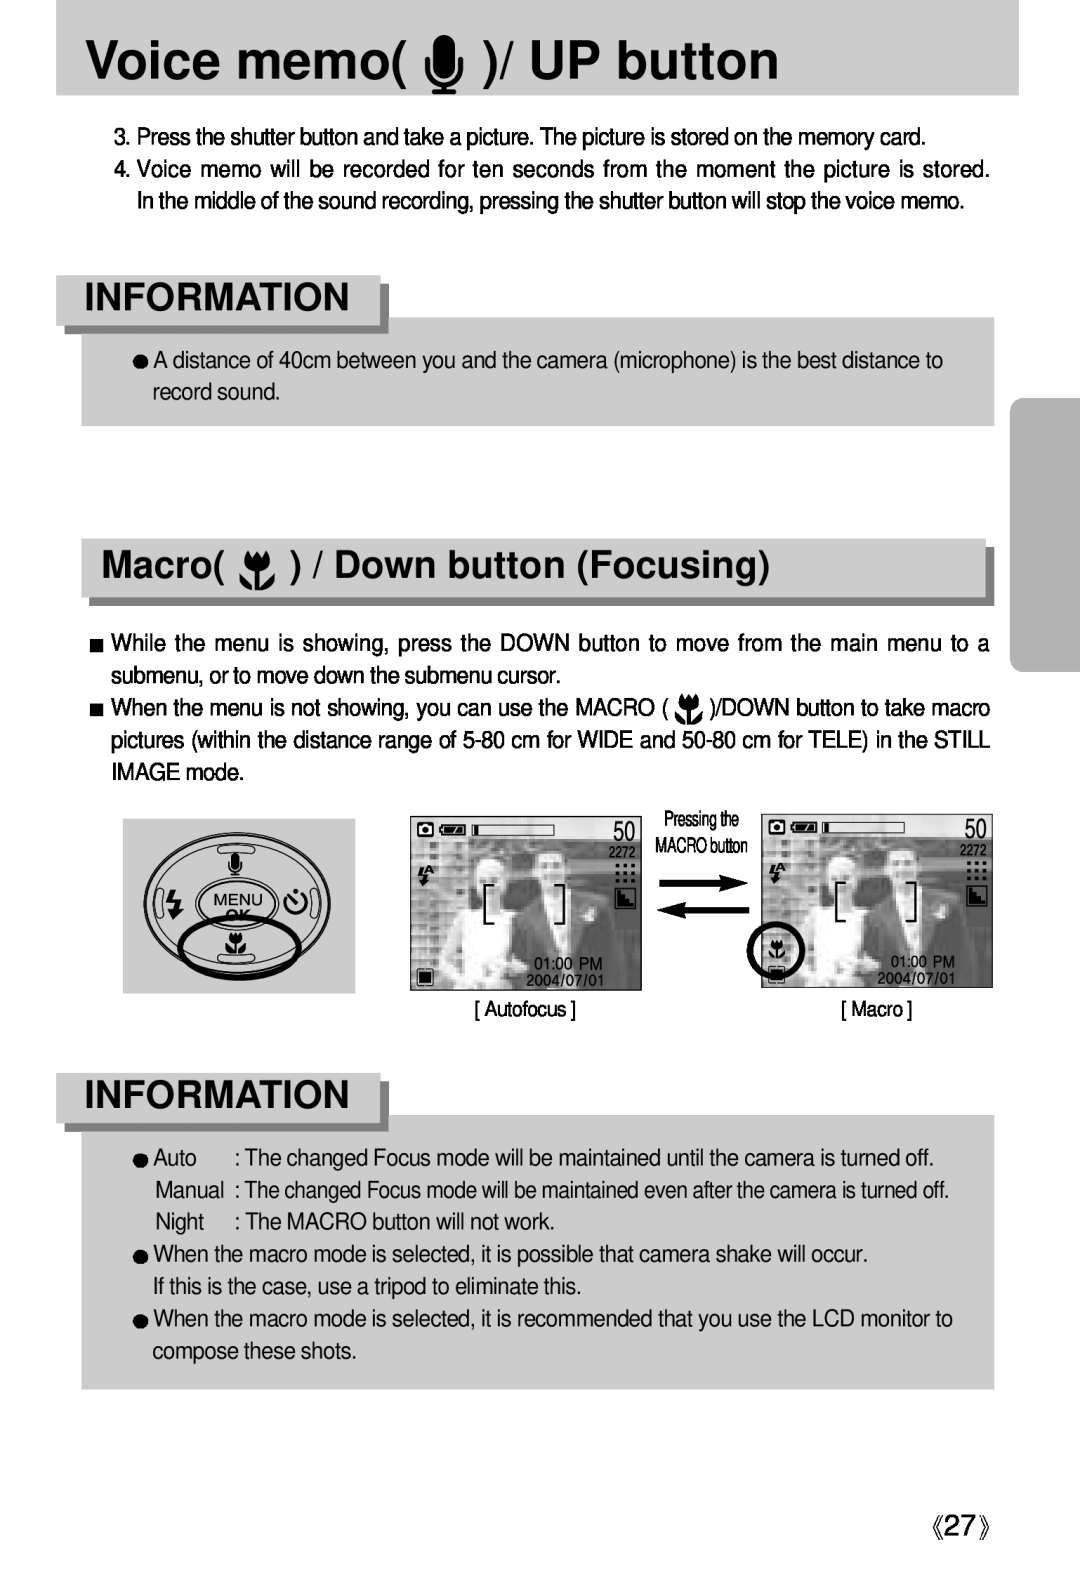 Samsung Digimax U-CA user manual Voice memo / UP button, Macro / Down button Focusing, Information 